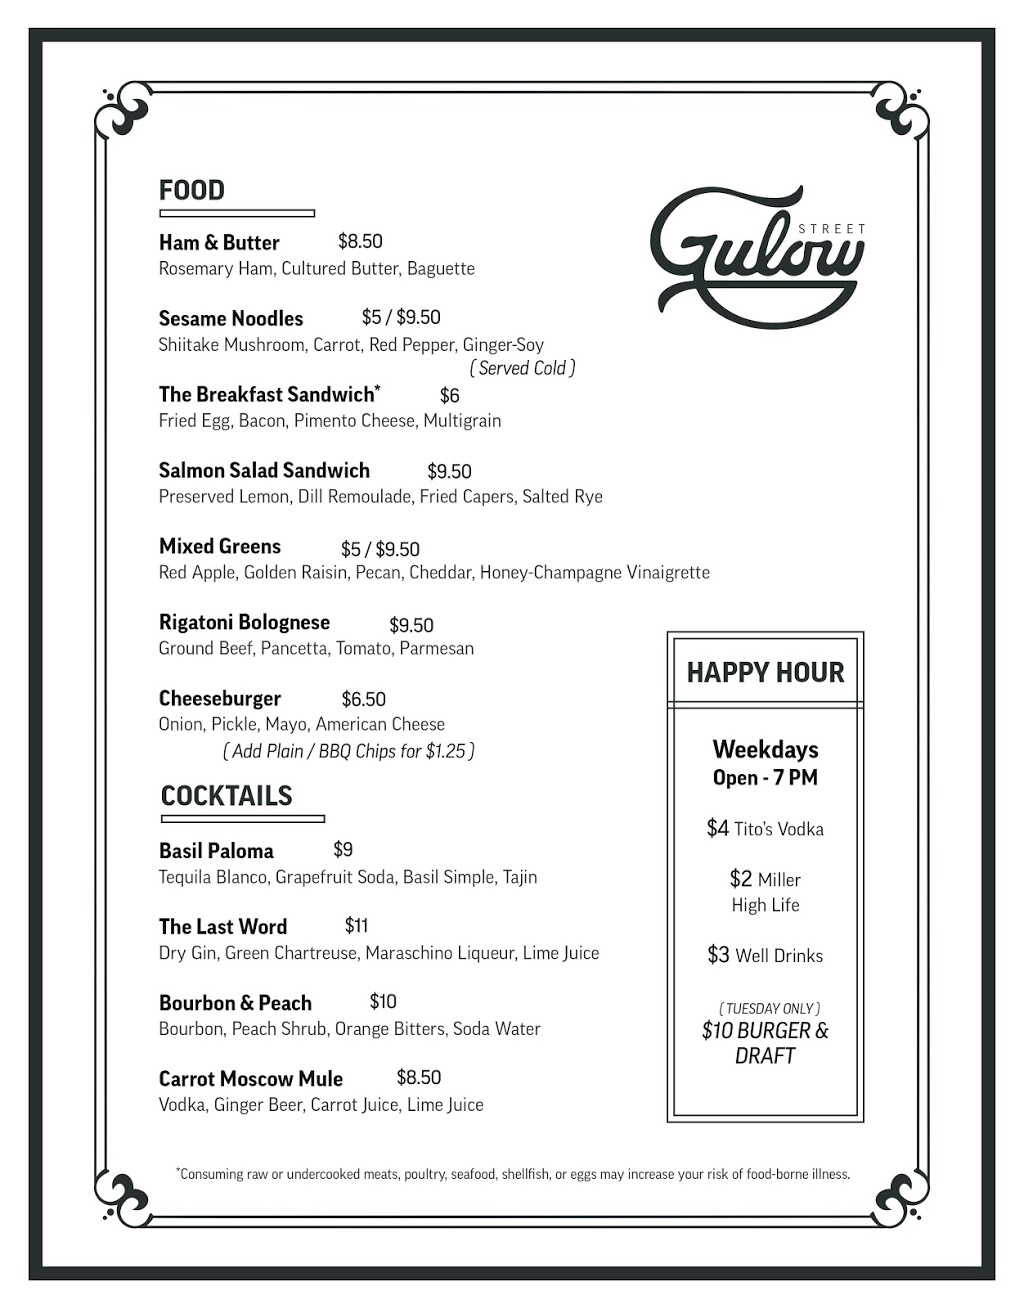 Gulow Street | restaurant | 1614 Hoffner St, Cincinnati, OH 45223, USA | 5138734005 OR +1 513-873-4005